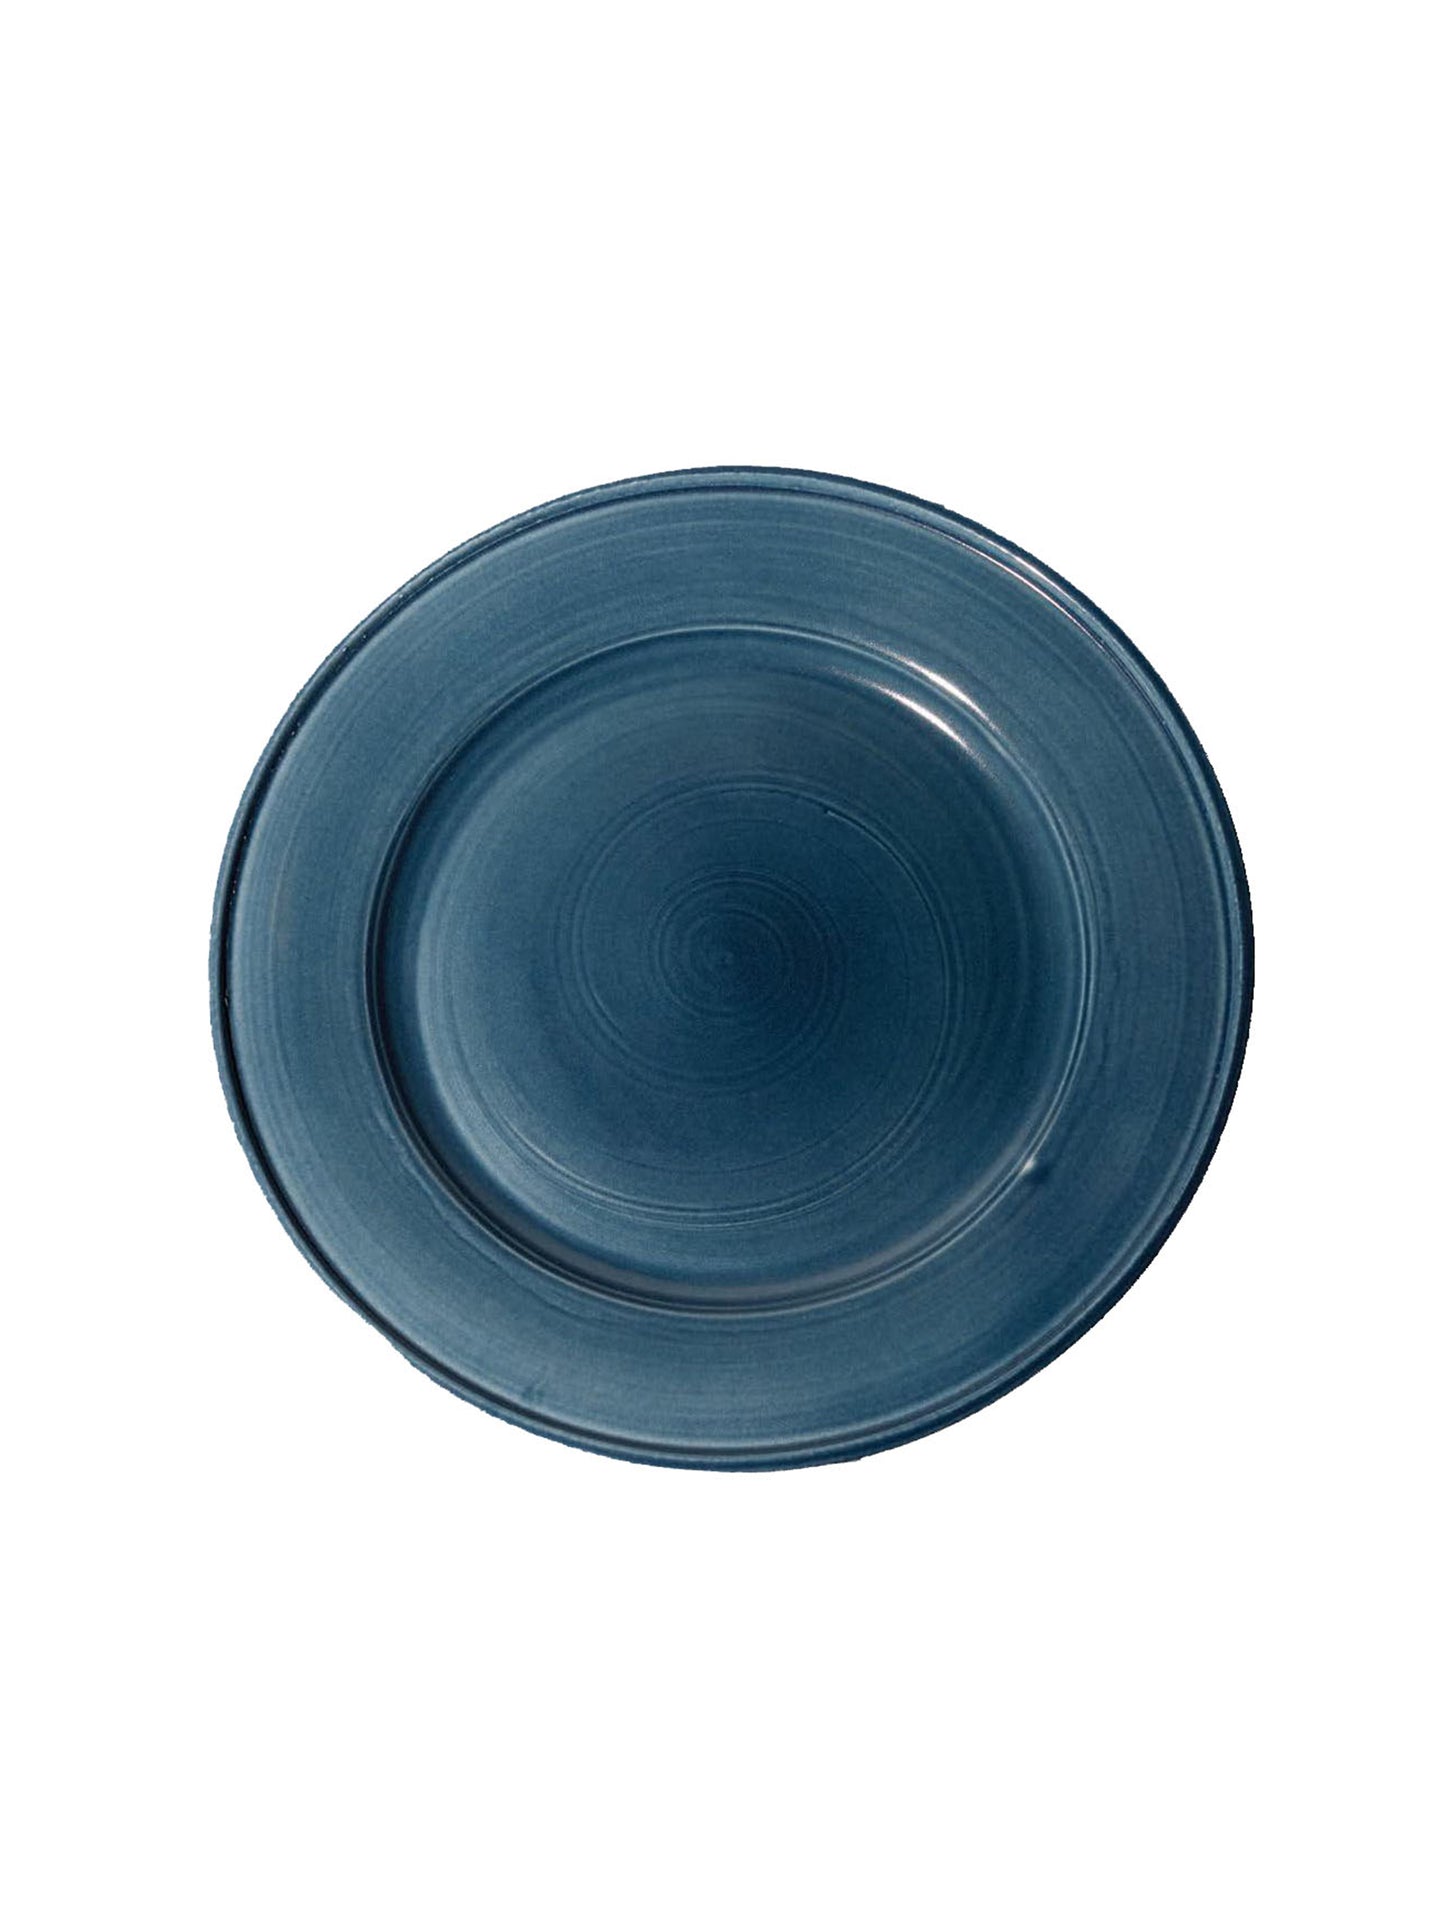 New York Stoneware Serving Platter Weston Table